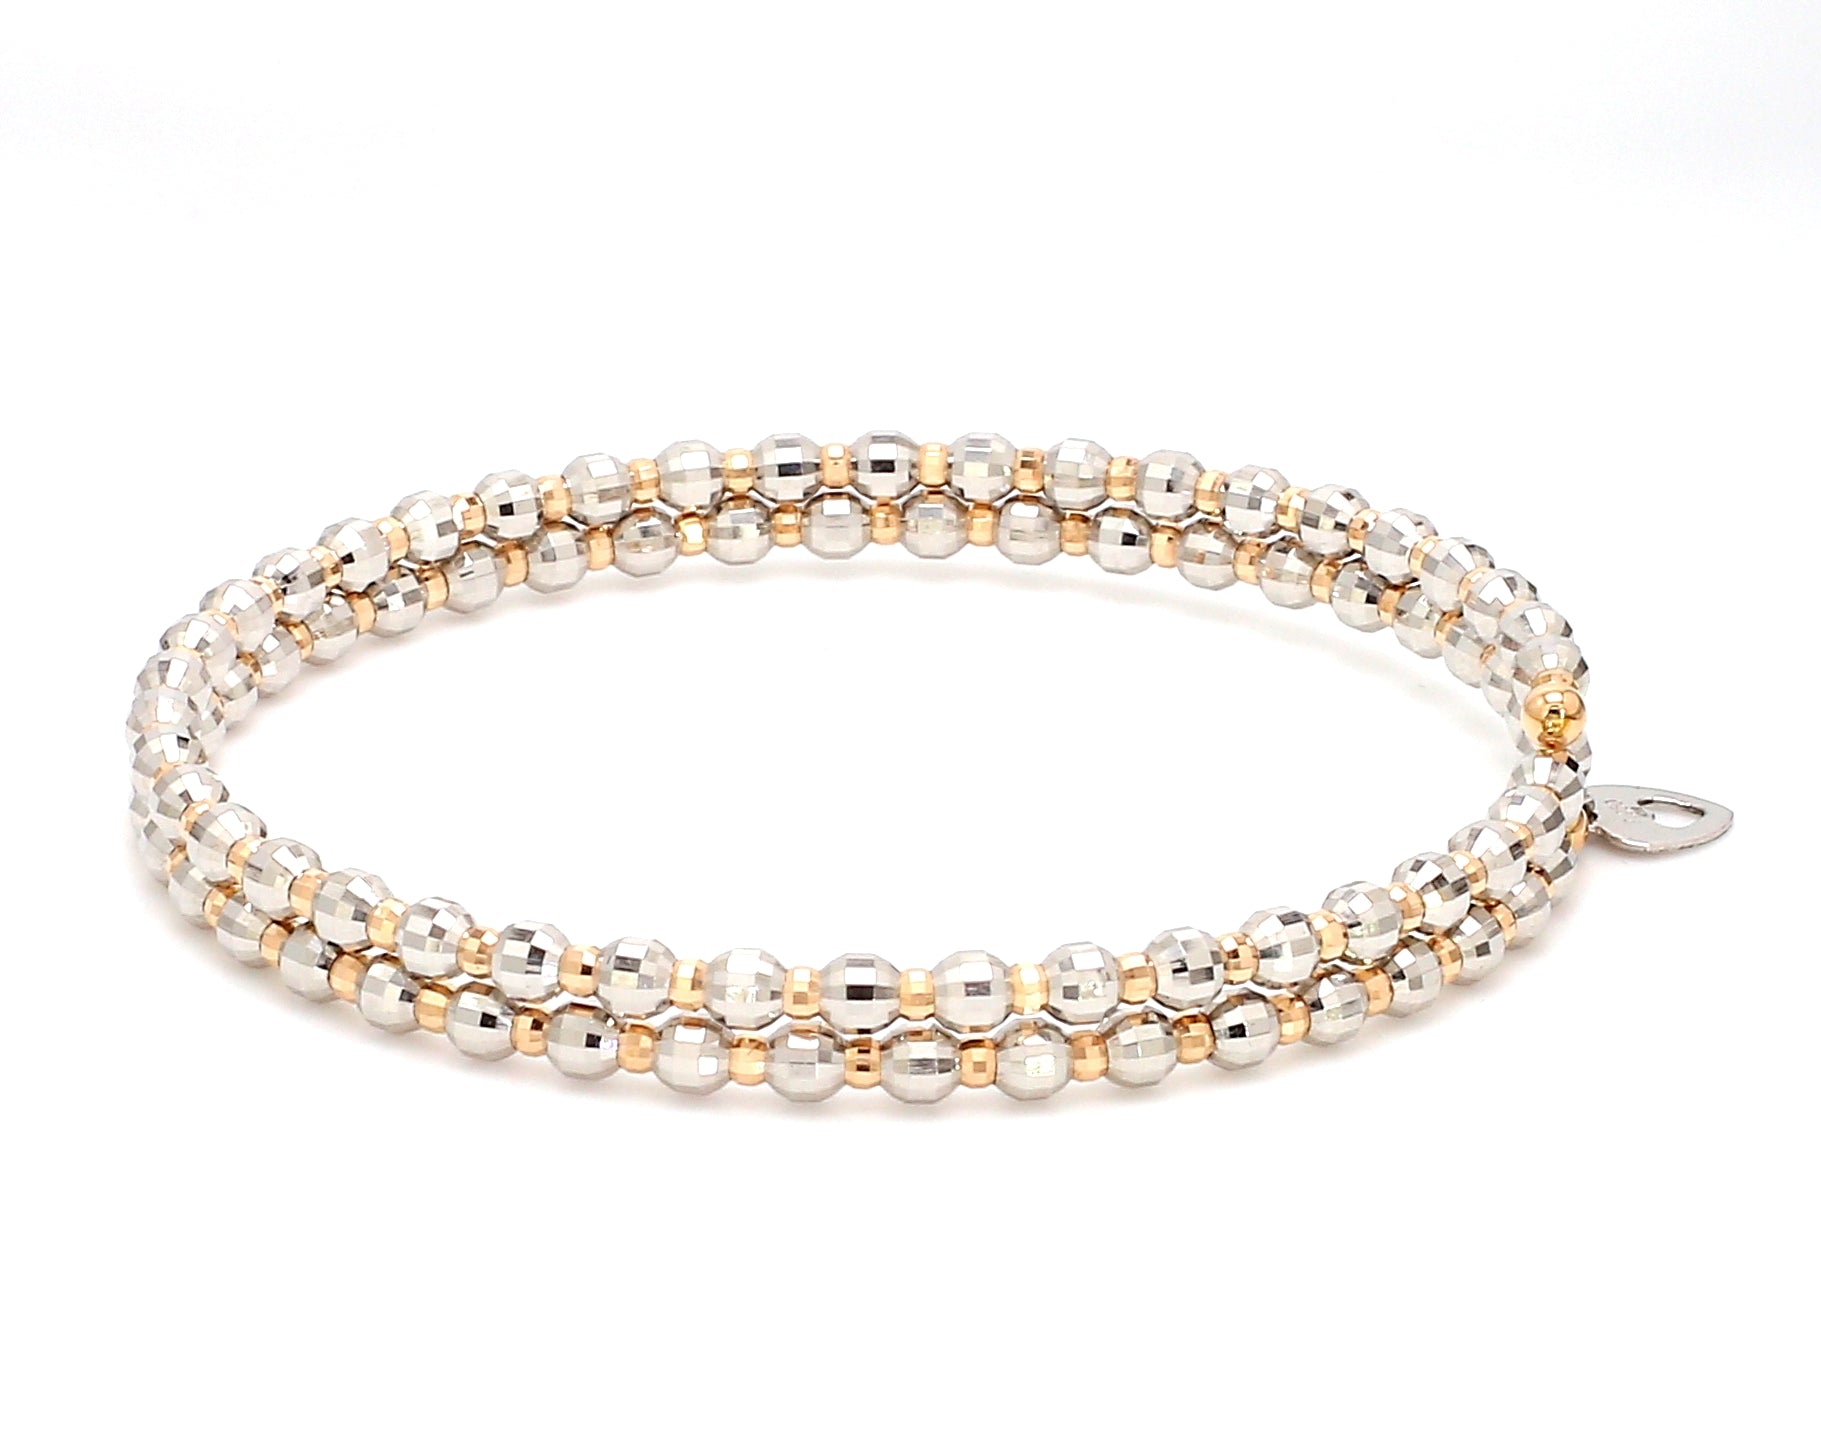 Japanese 2-row Platinum & Rose Gold Bracelet for Women with Diamond Cut Balls JL PTB 767